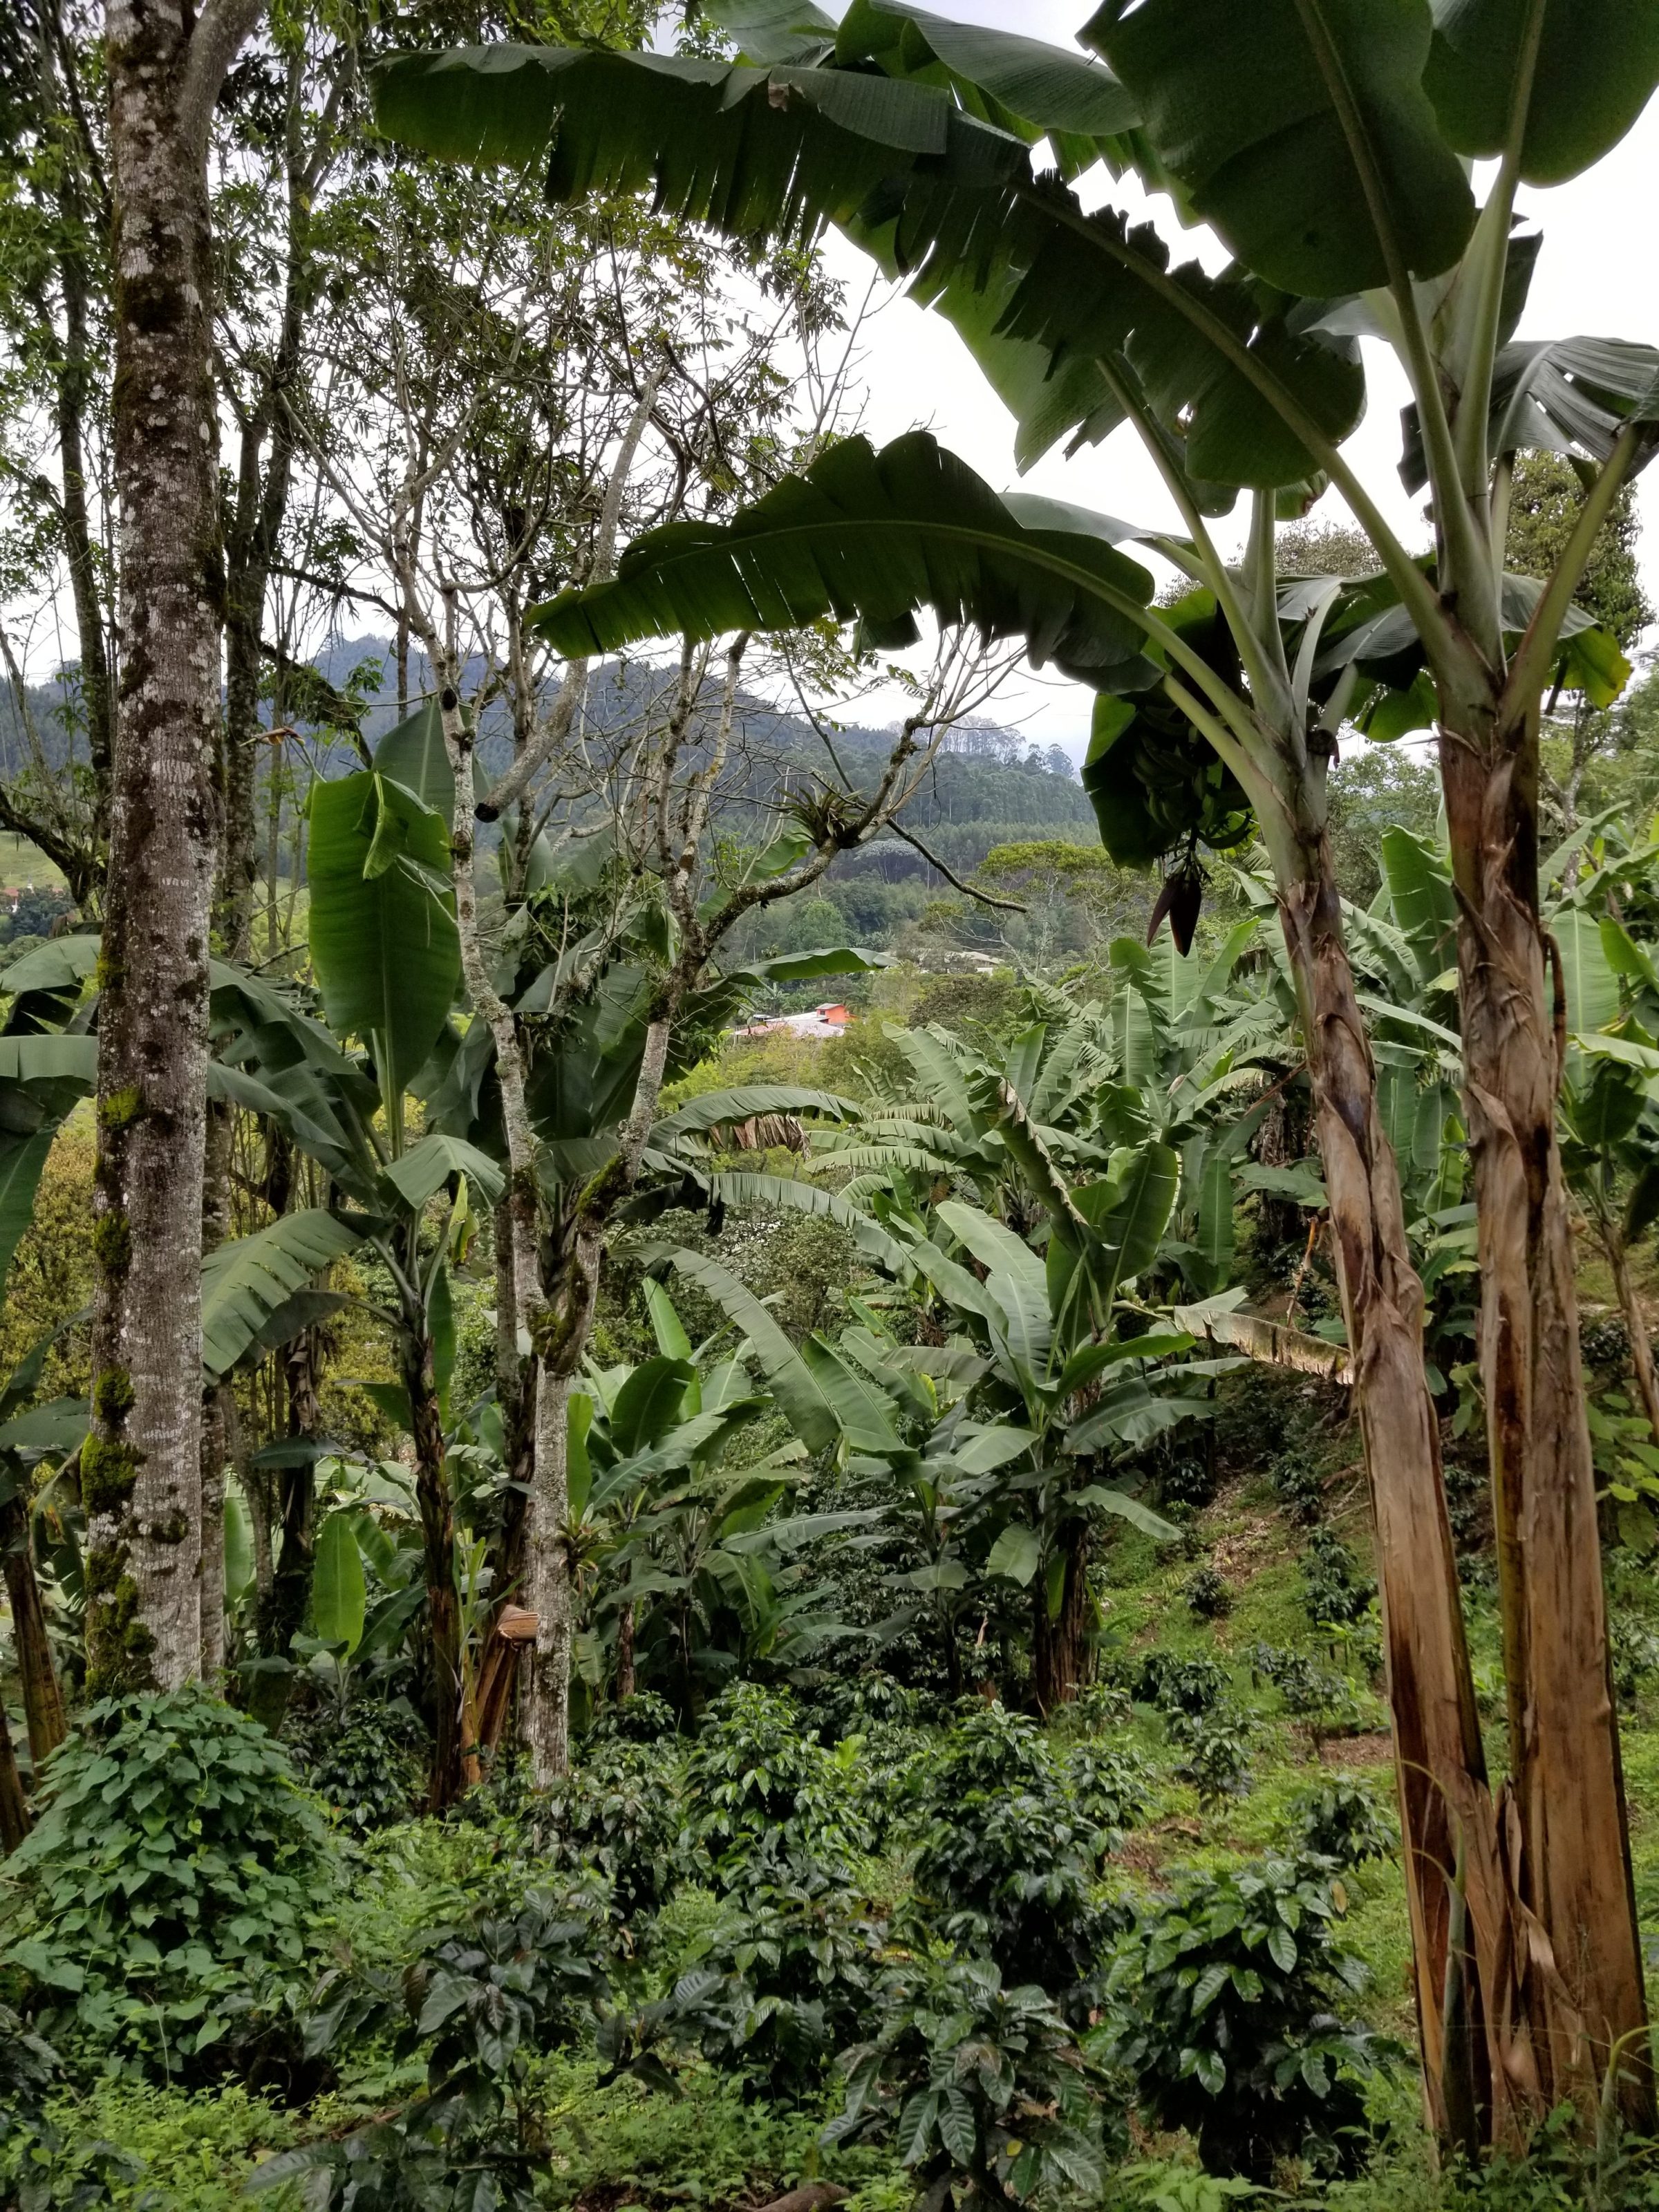 Banana trees surrounding coffee plants